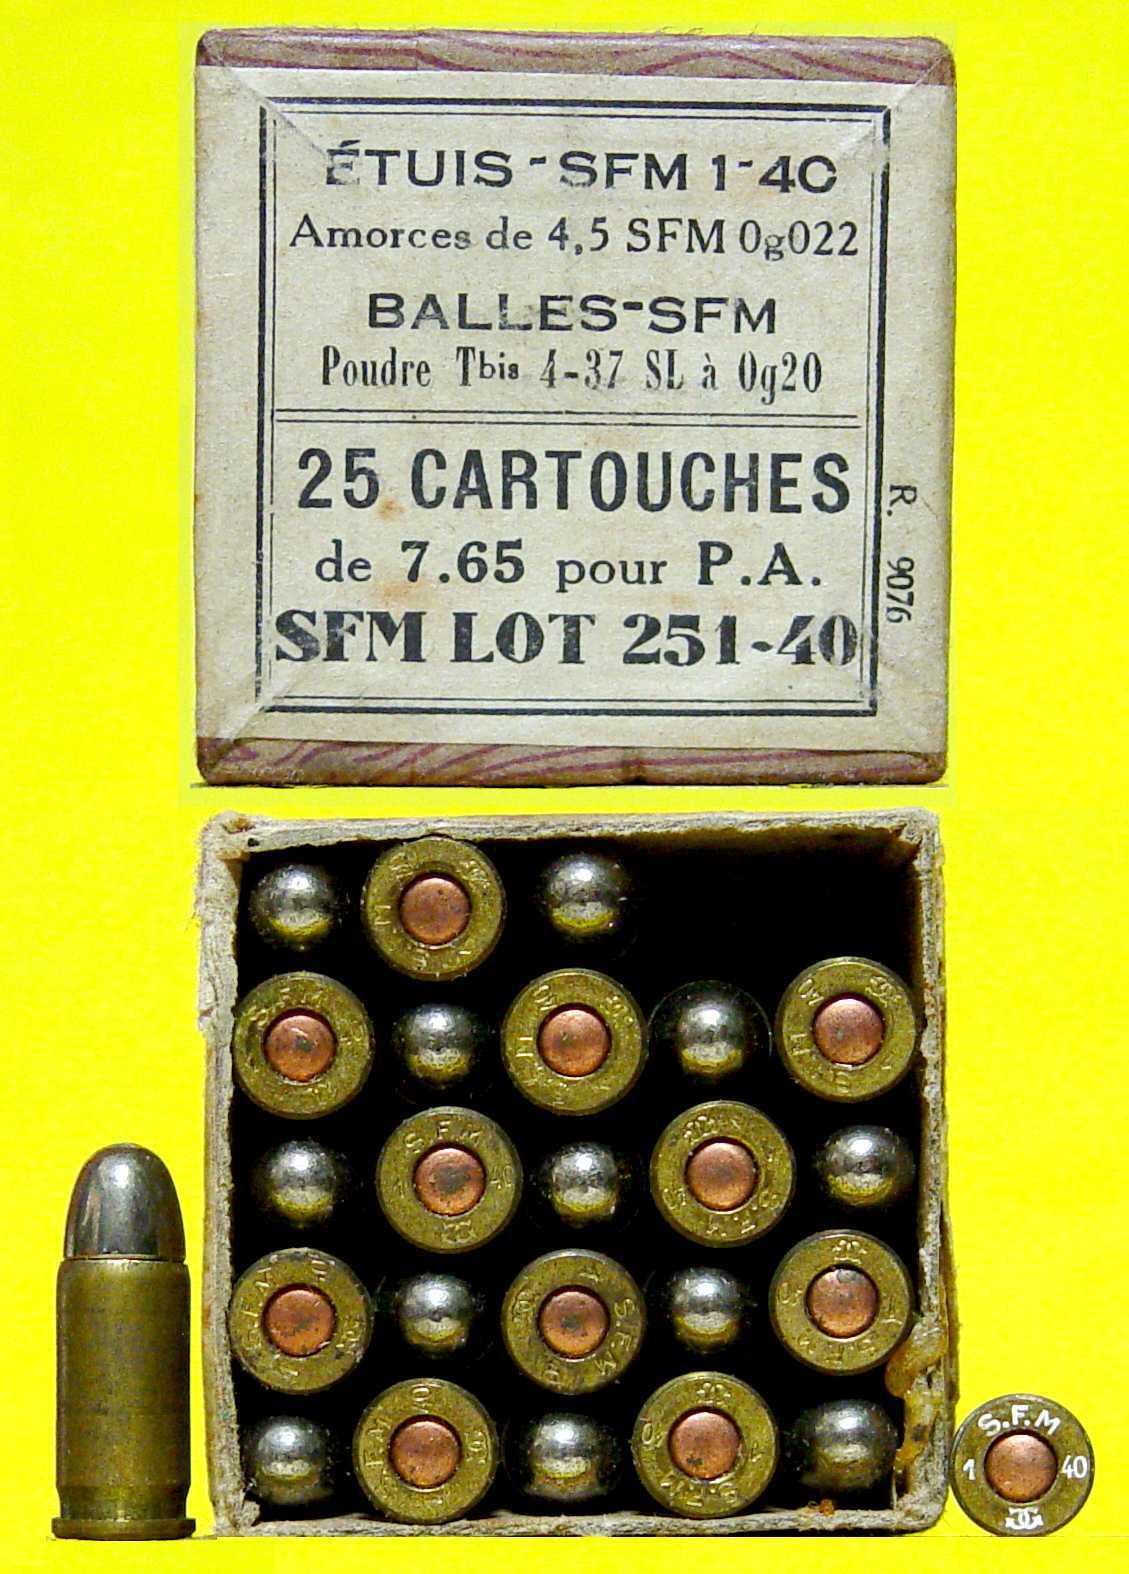 Austria Roth Ammunition 1927 Catalog 